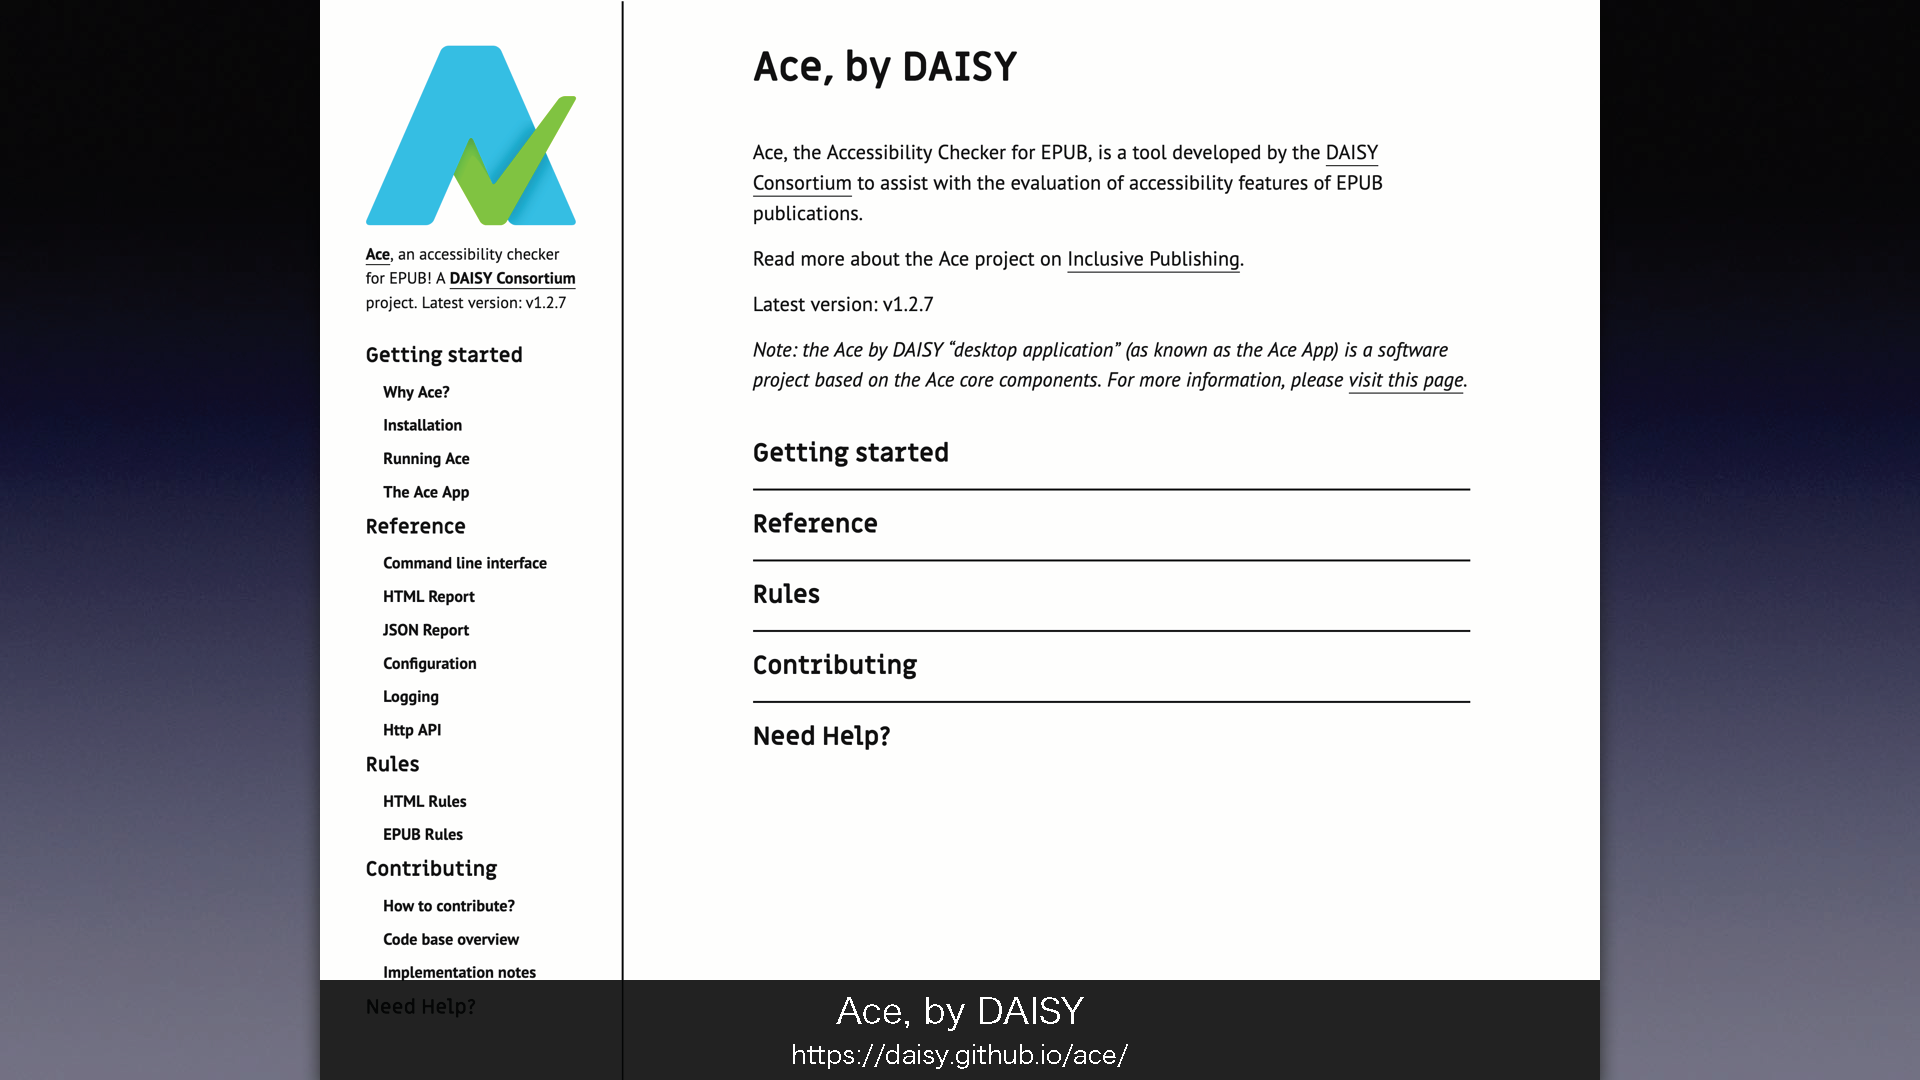 「Ace,by DAISY」について掲載されたウェブページの画像
	